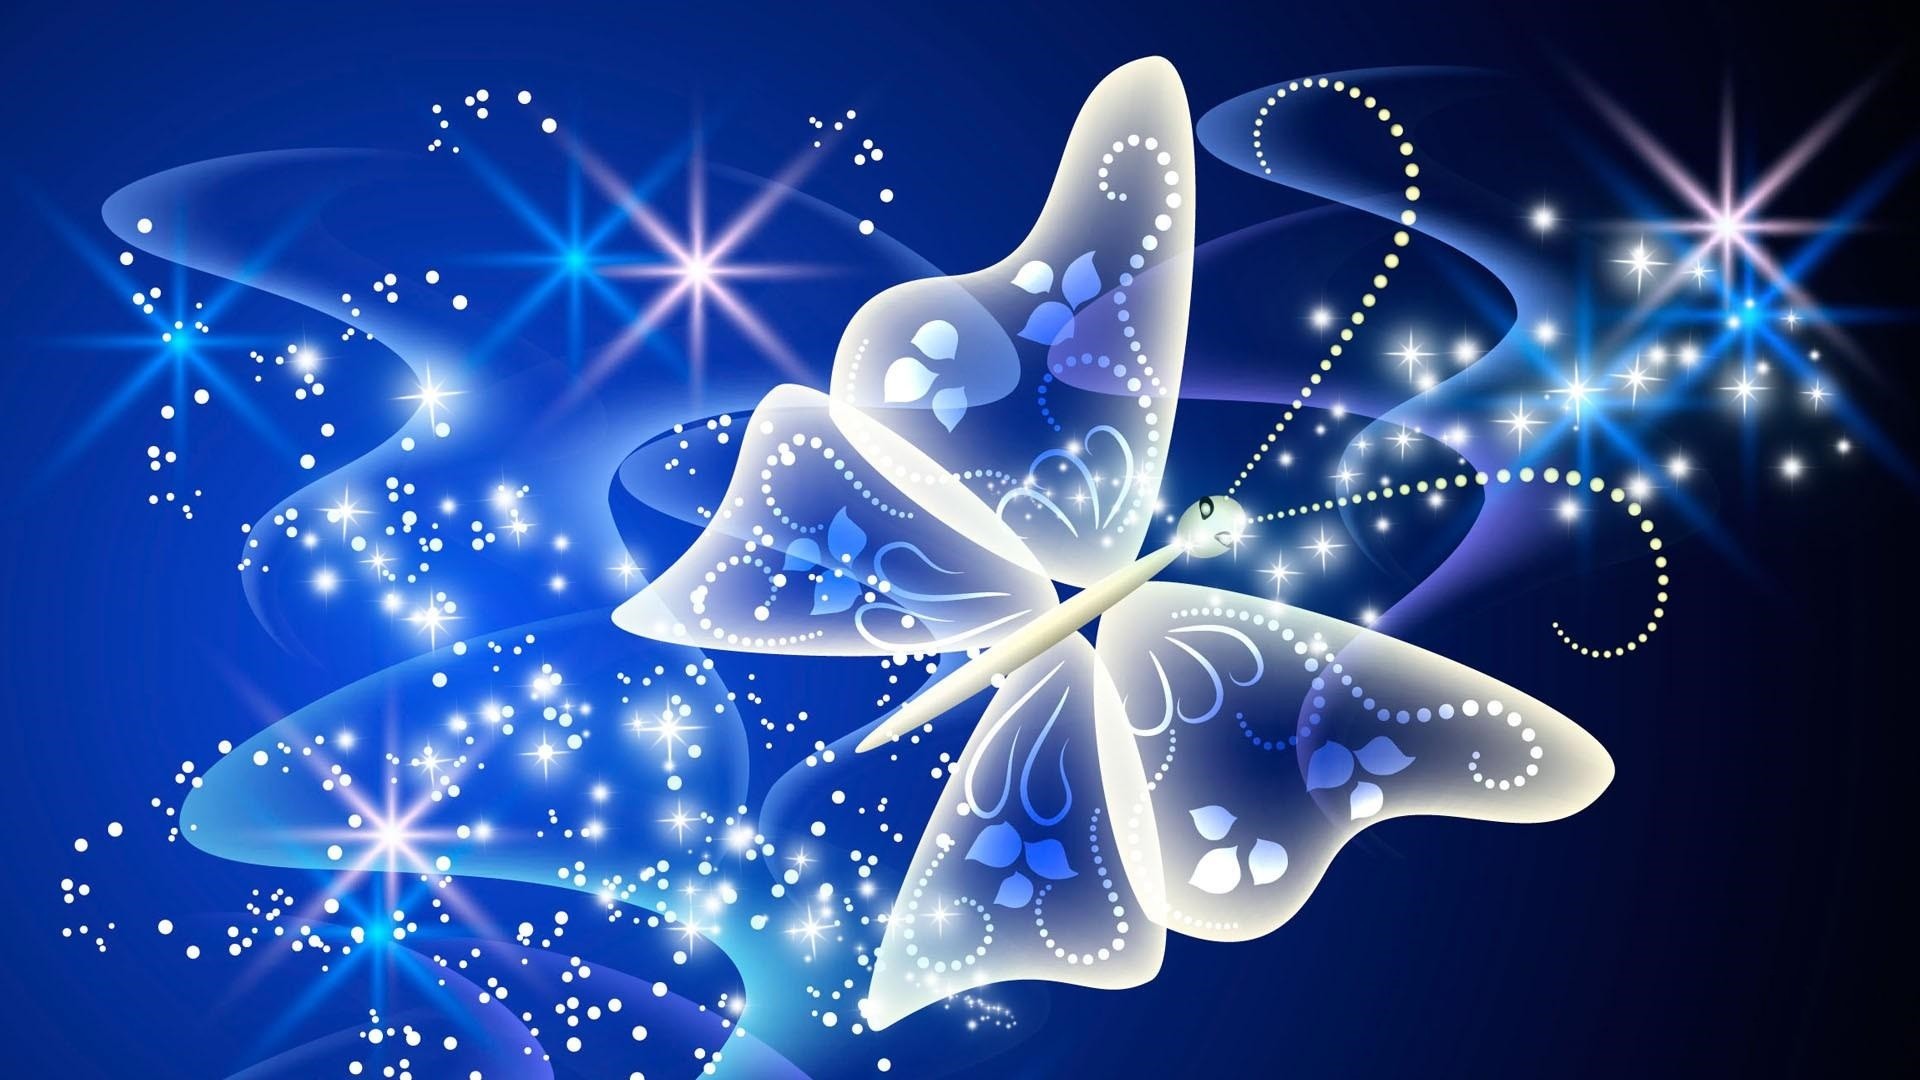 The Magical Butterfly Wallpaper HD Desktop Background